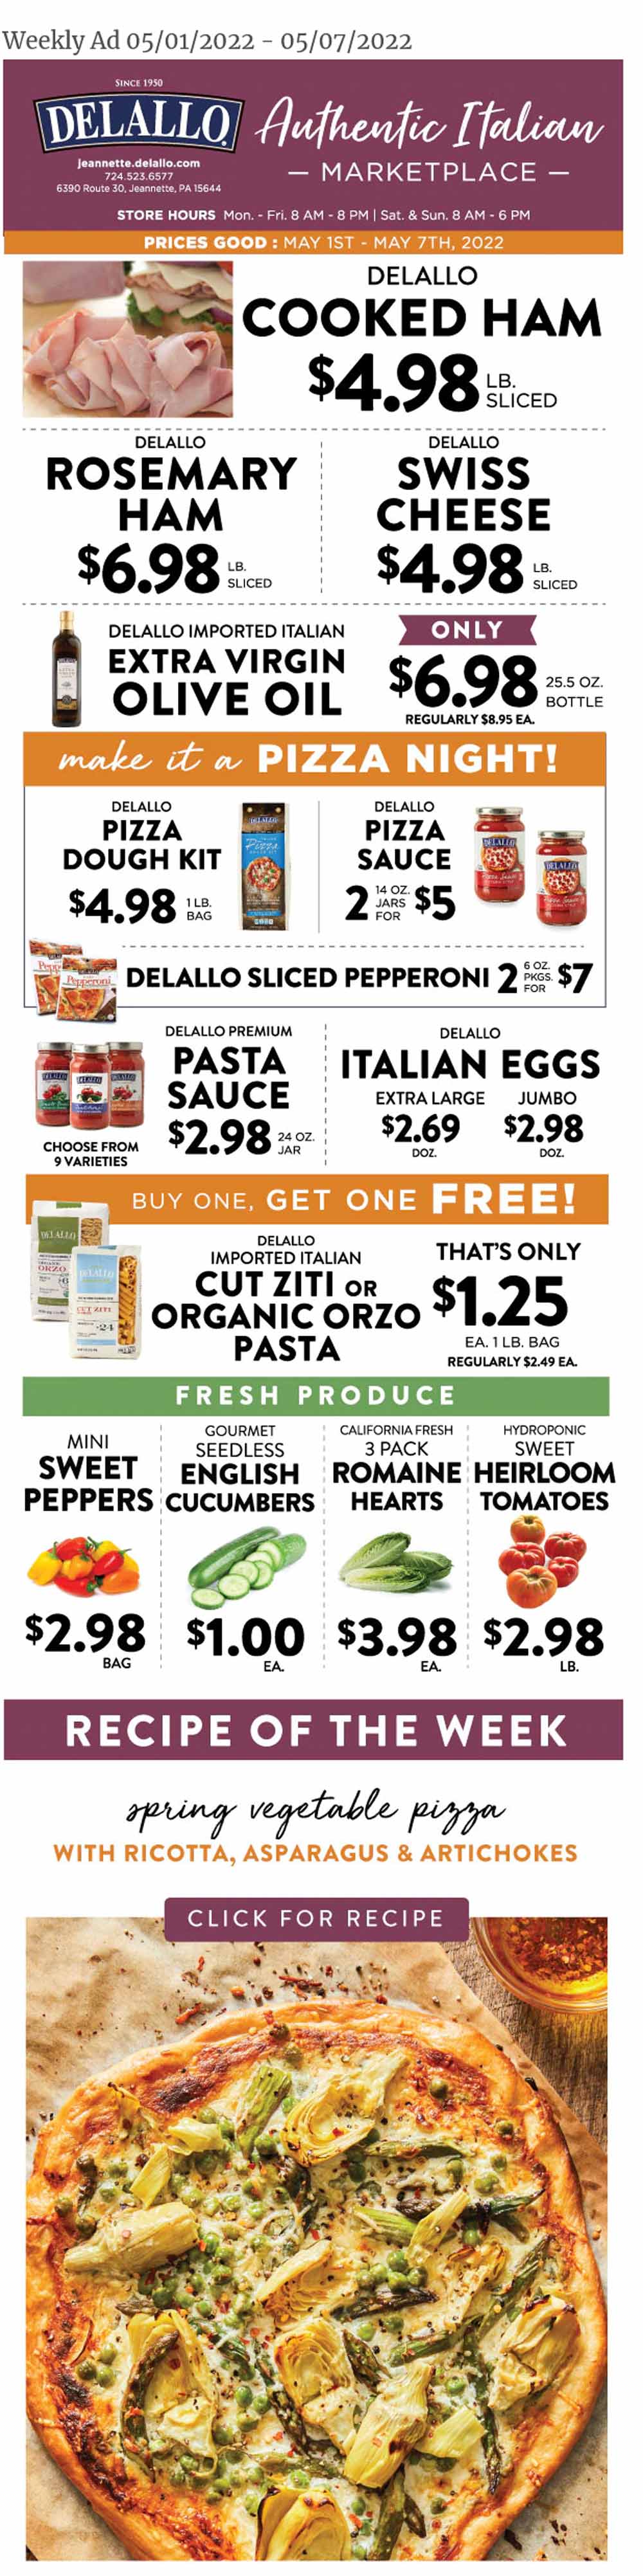 Delallo Weekly Ad (5/01/22 - 5/07/22)